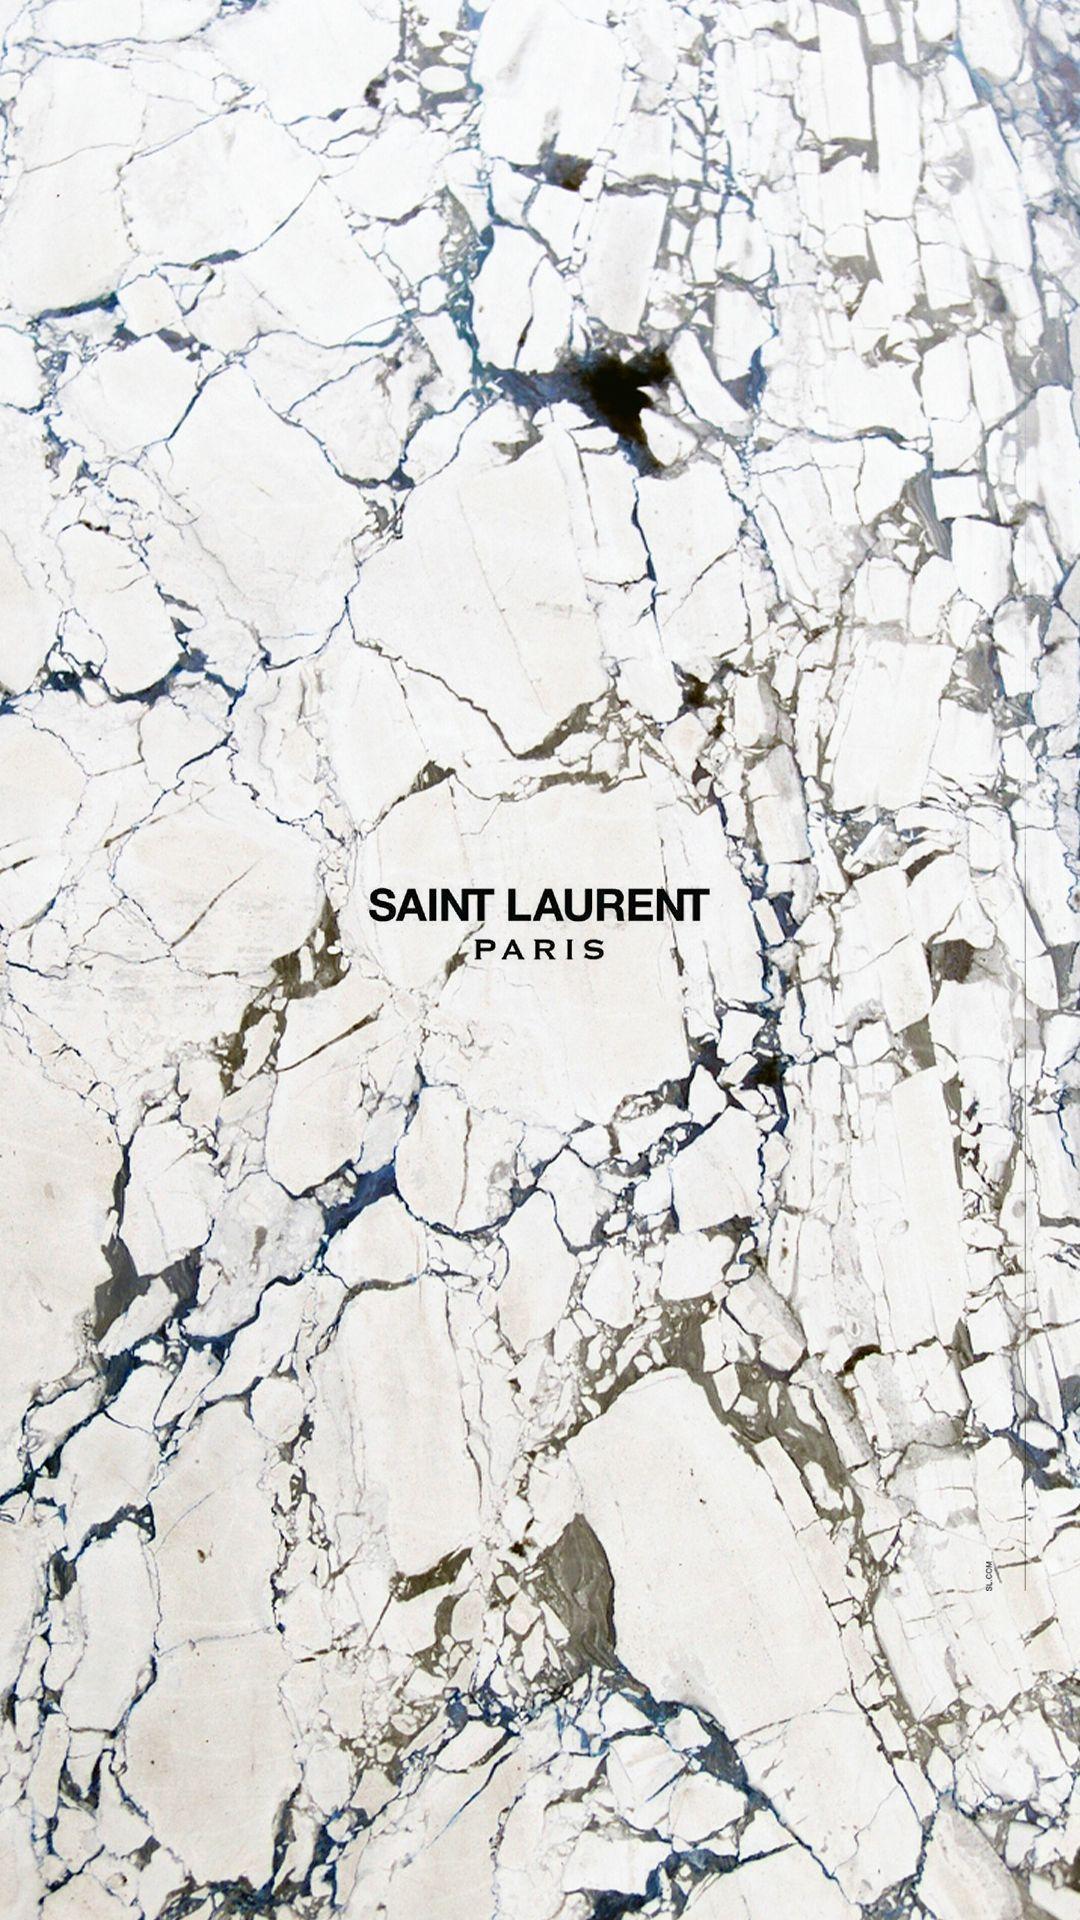 Saint Laurent Paris. Wallpaper. Hypebeast wallpaper